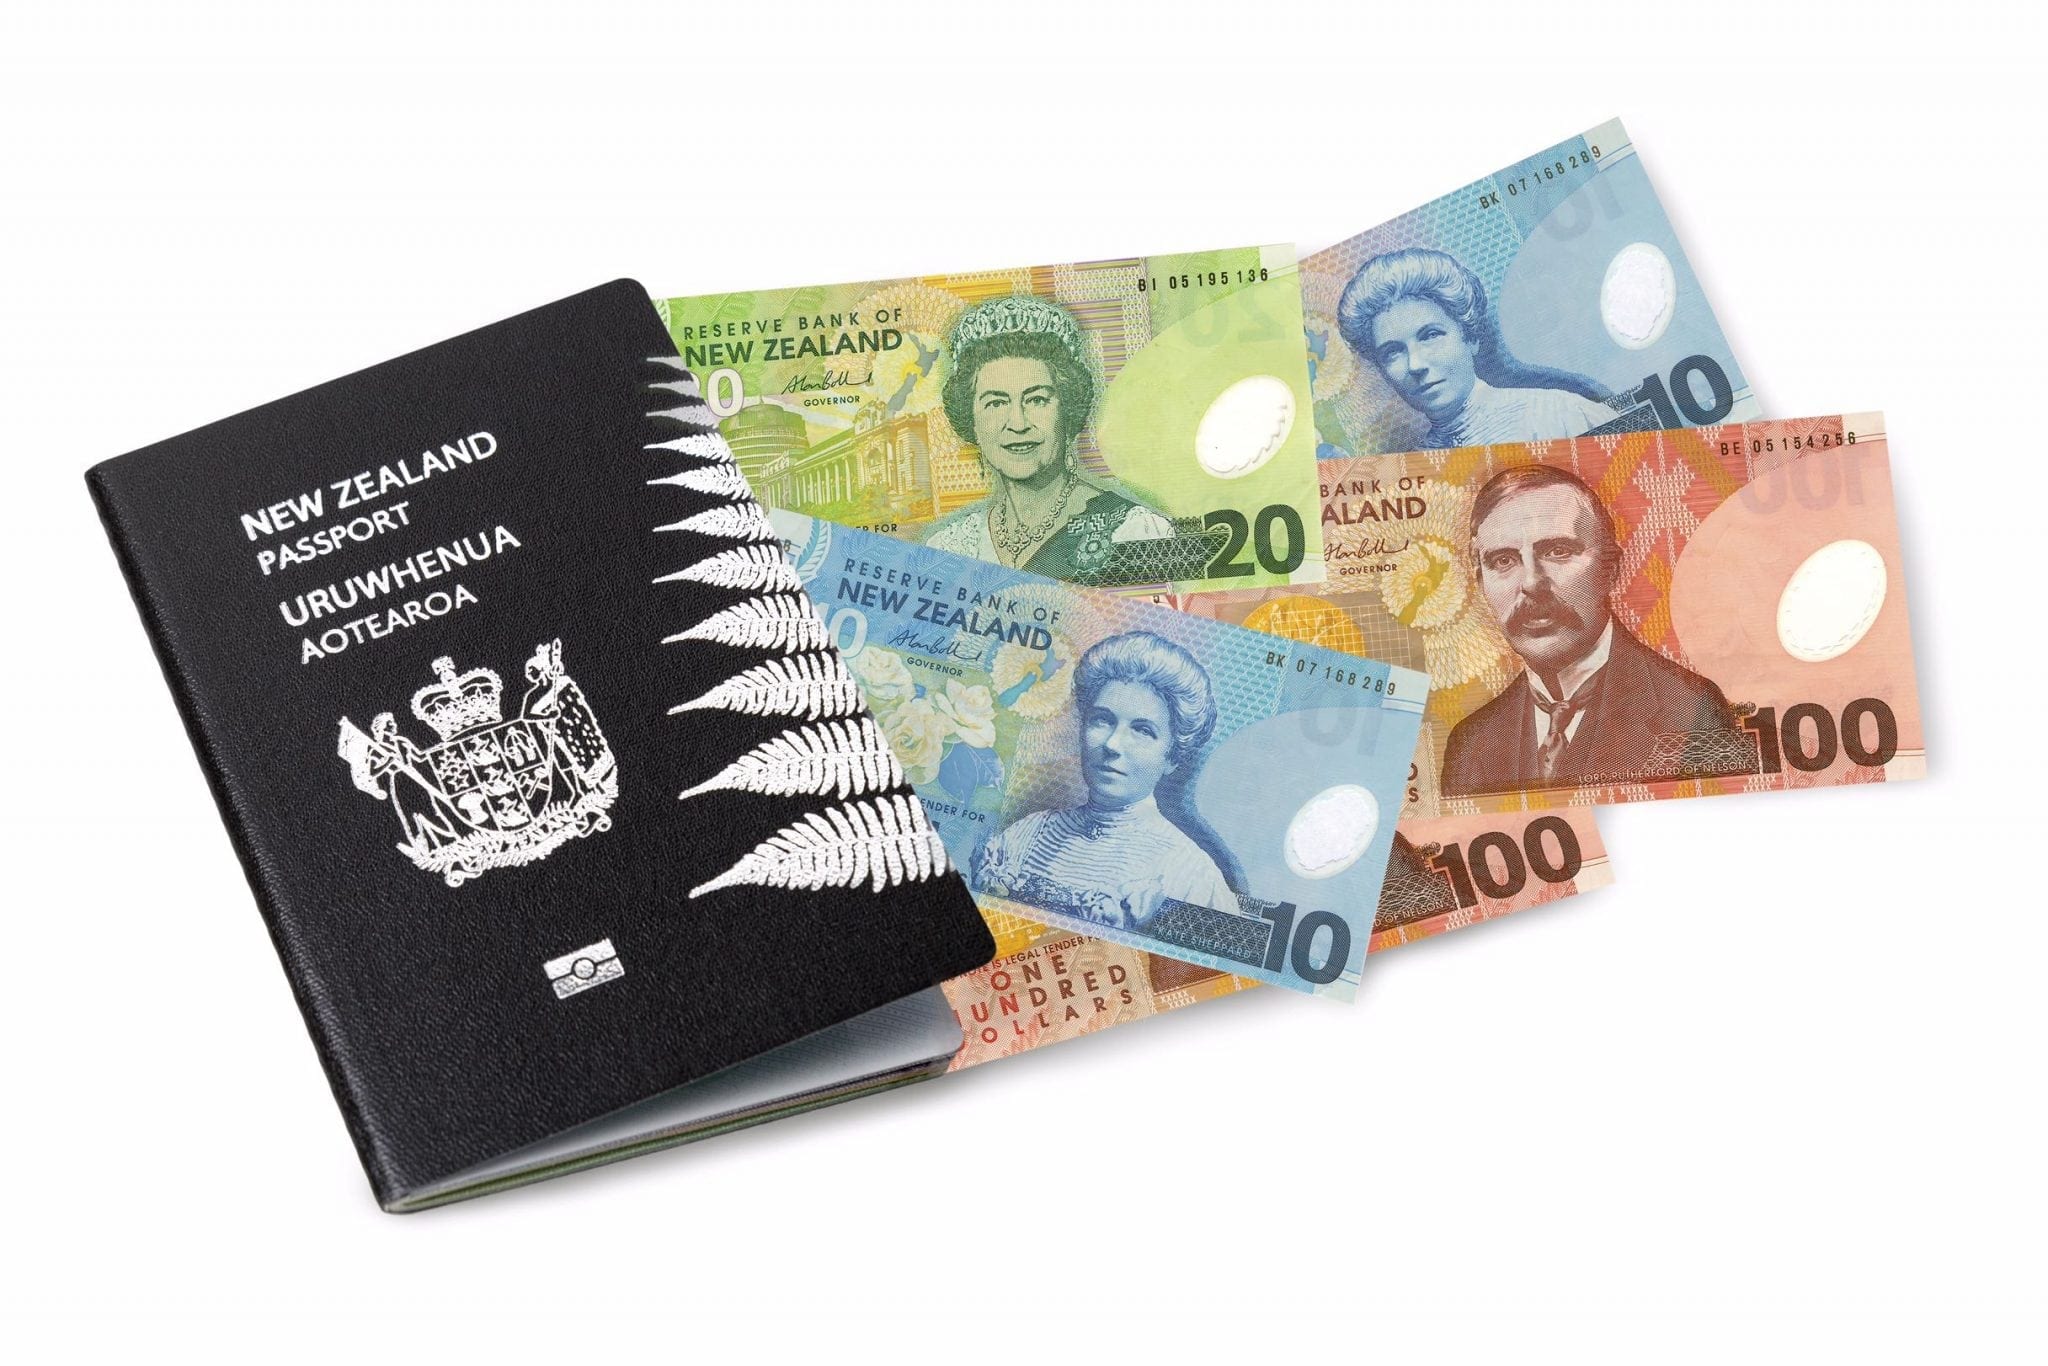 New Zealand passport and cash